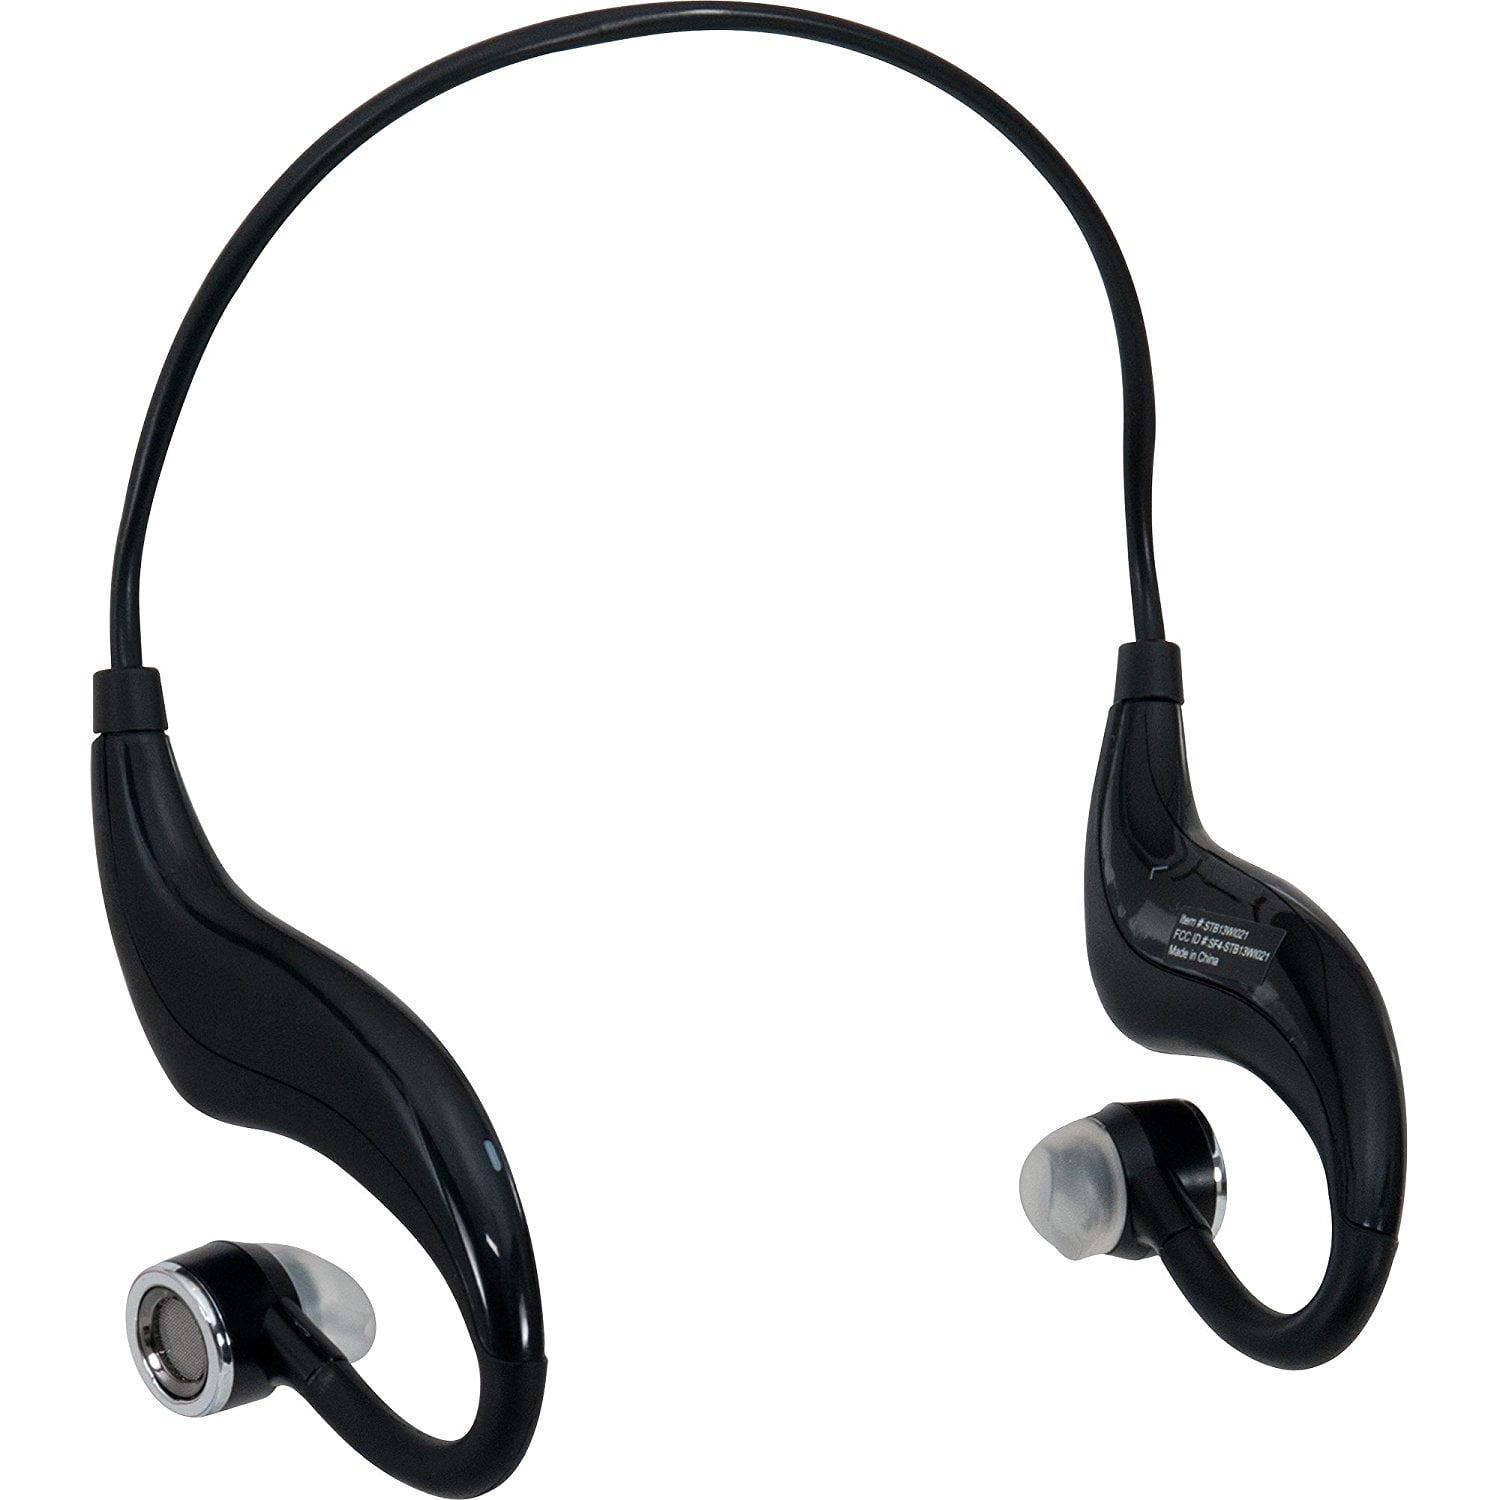 Наушники для телевизора 5 метров. Наушники BT Wireless Headset. Perfeo 4talk стерео-гарнитура полноразмерная черная. Блютуз наушники Pro Ears. Wireless Headphones Black.